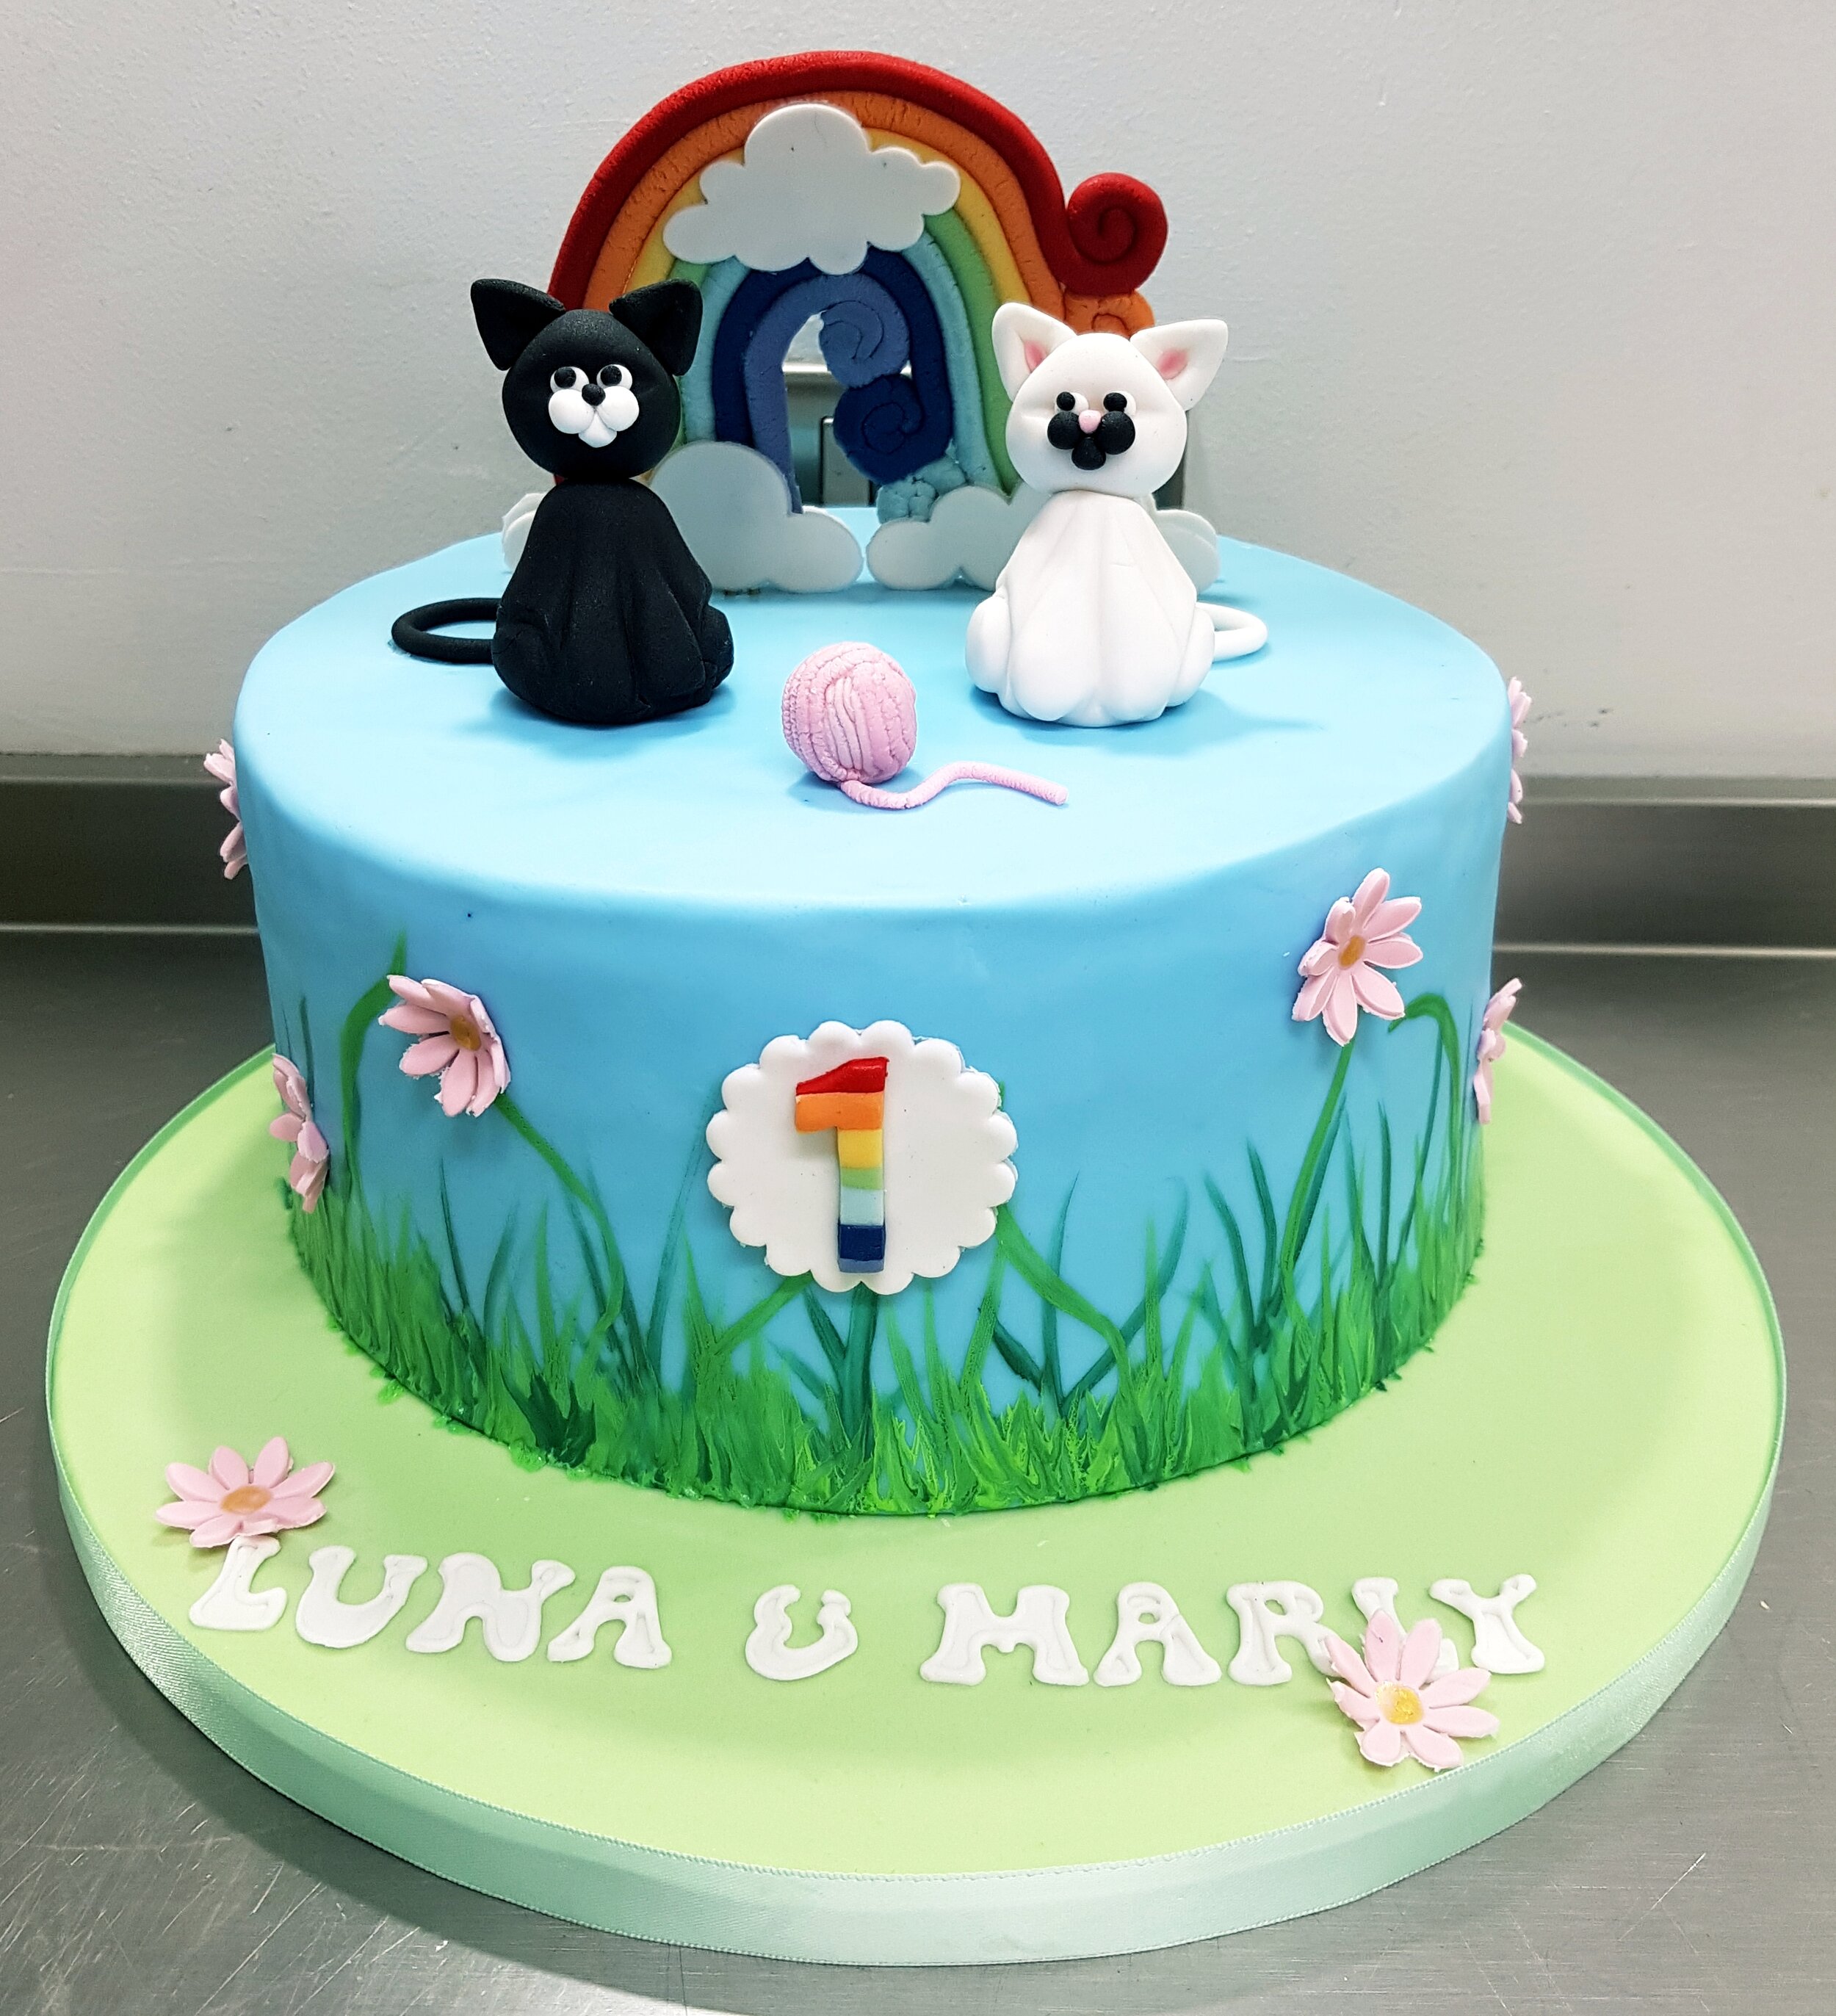 cats and rainbows cake.jpg